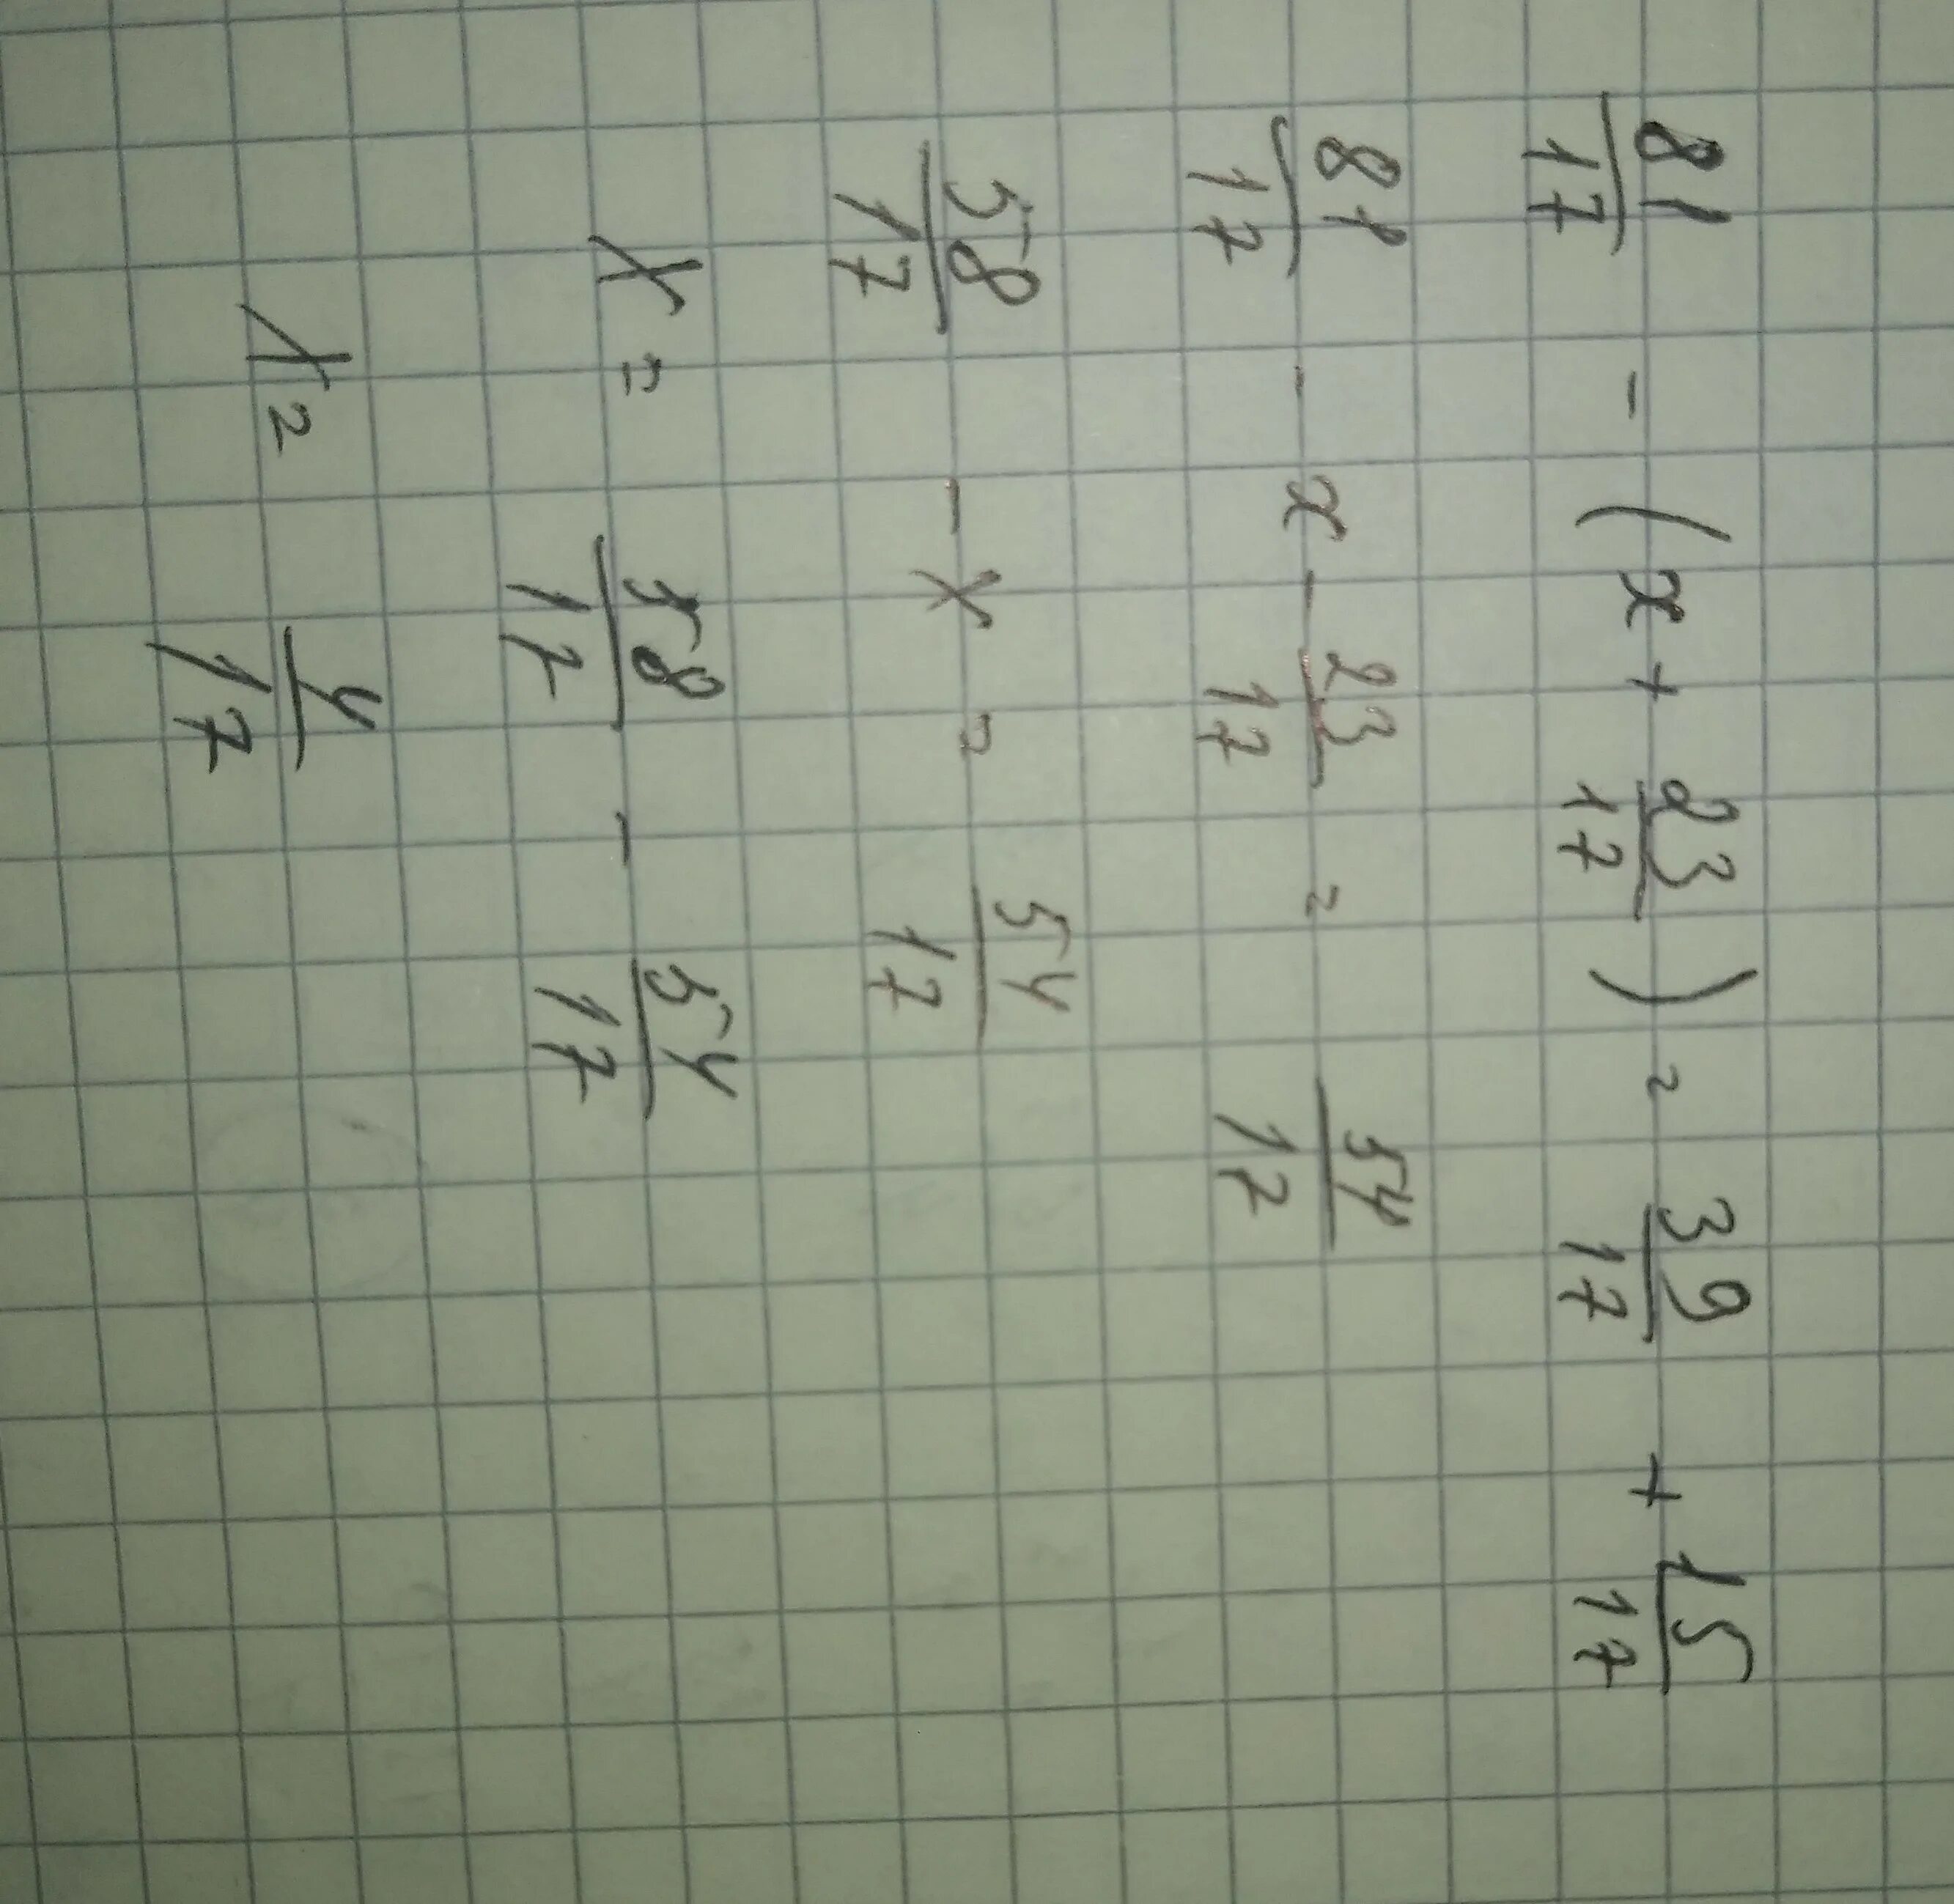 2 3 17 х 8. Один минус пятнадцать Семнадцатых. Икс минус 17. 9 Плюс 3/17. (Х+3_17)+4_17=1.